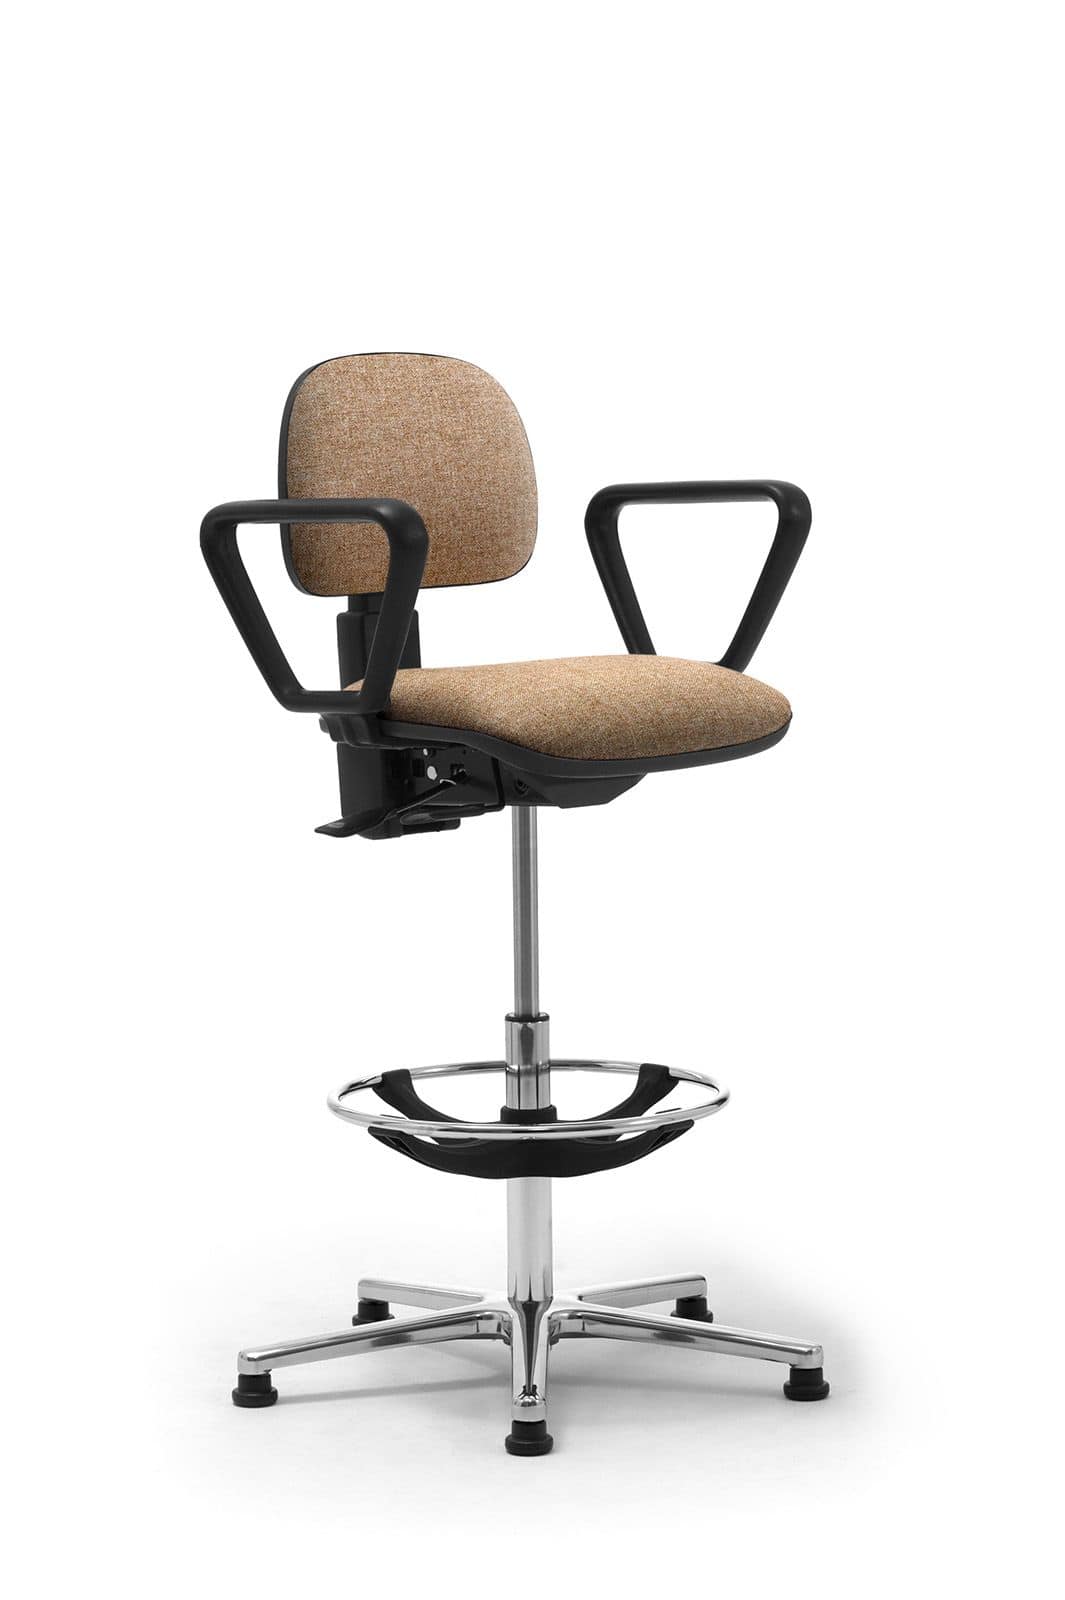 https://www.idfdesign.com/images/reception-office-stools/saloon-functional-barstools-3.jpg